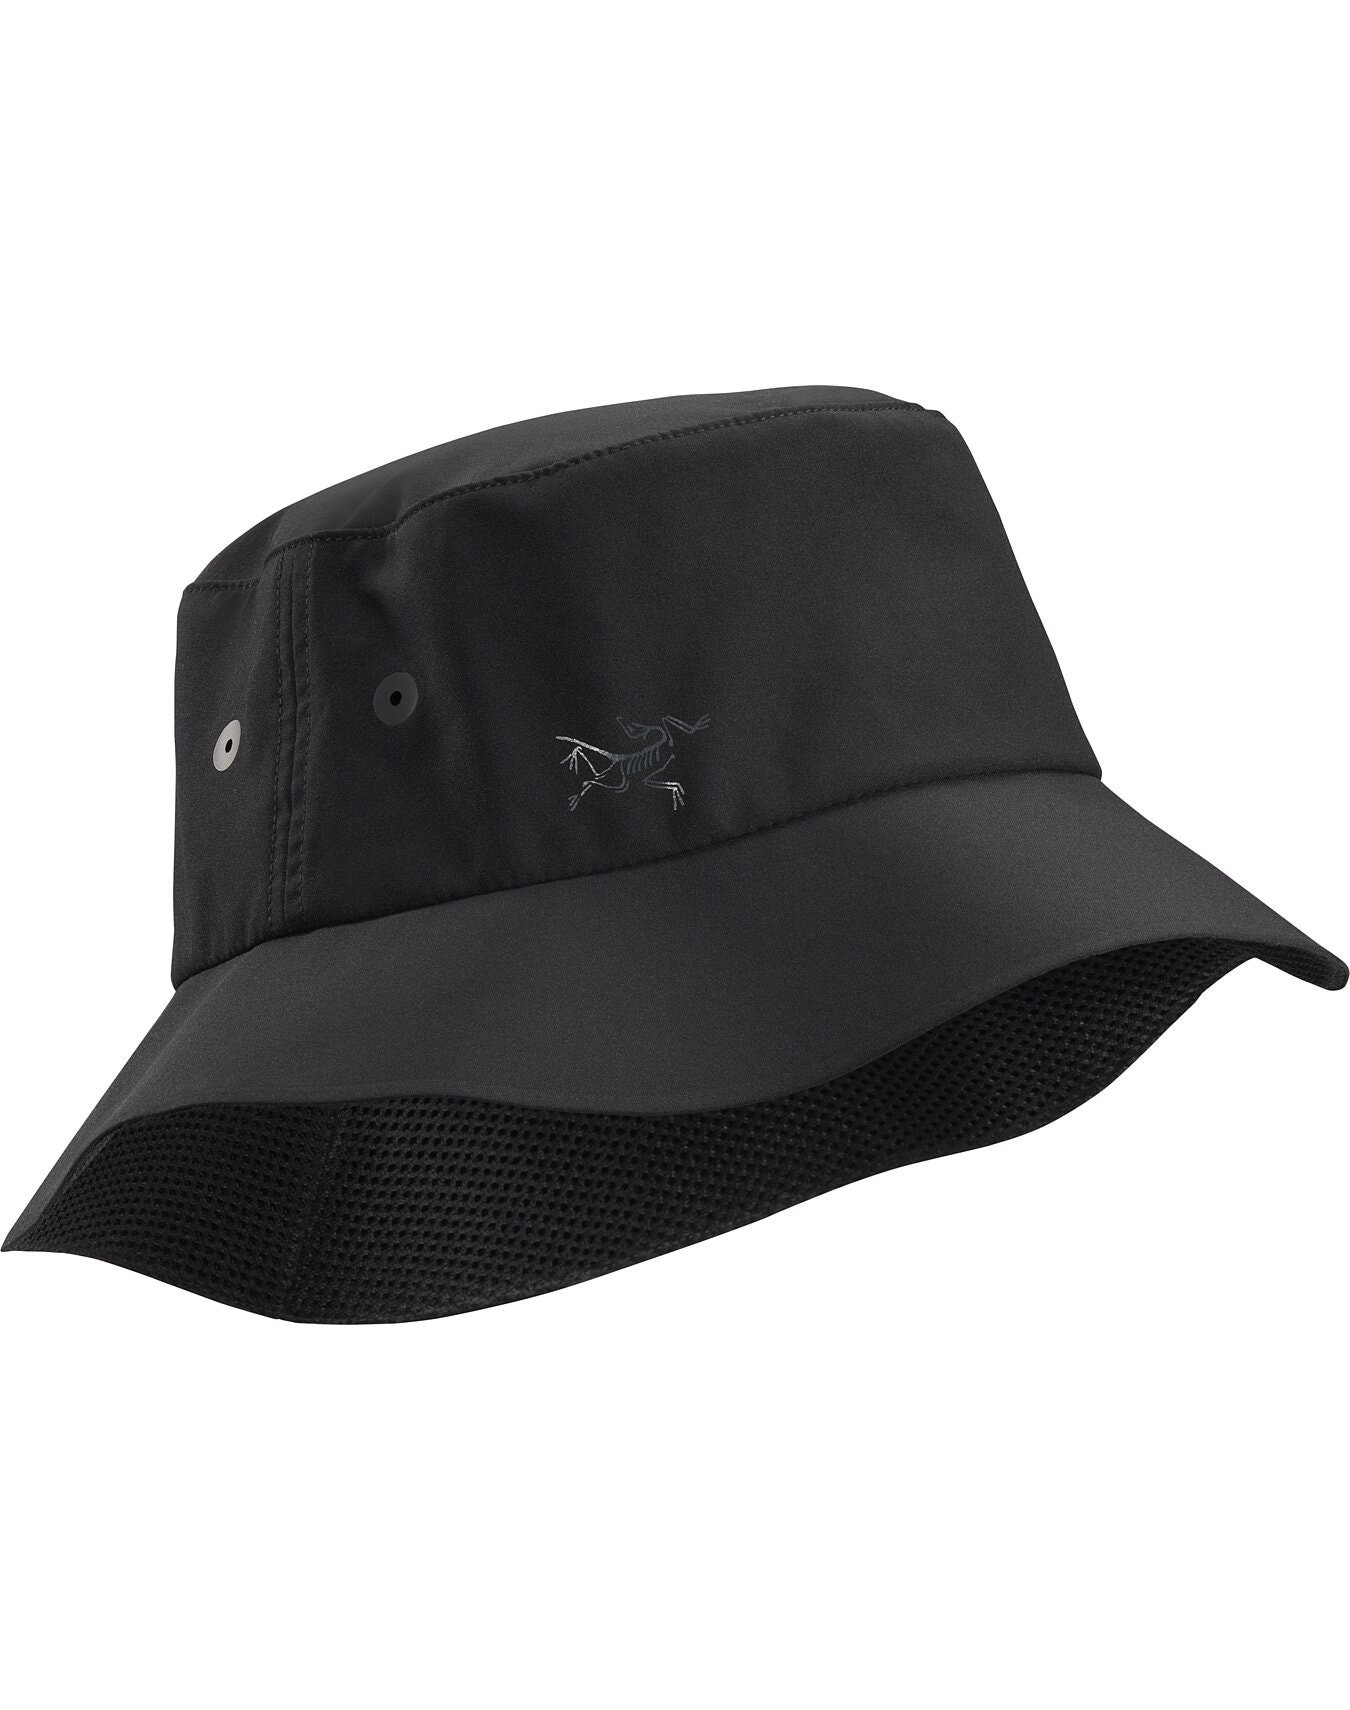 Sinsolo Bucket Hat Size S/M Sun Cap Summer Black Travel Beach Outdoor Men UPF 50+ - 1